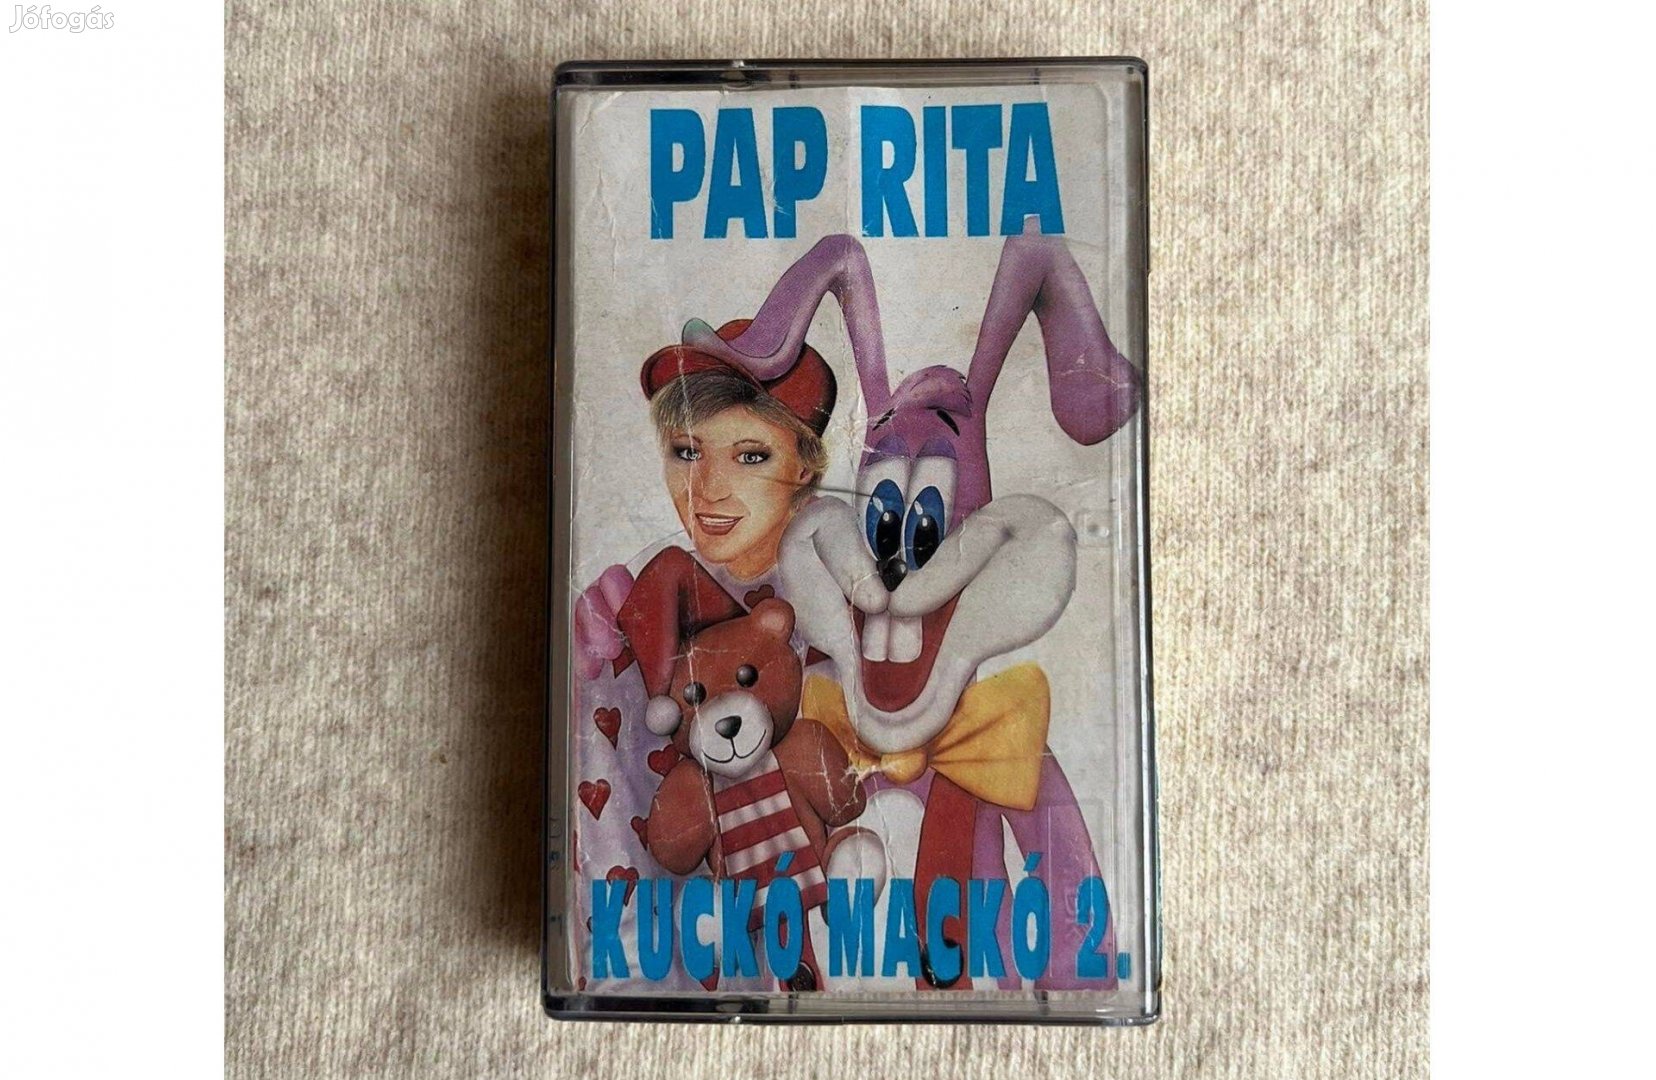 Pap Rita - Kuckó Mackó 2